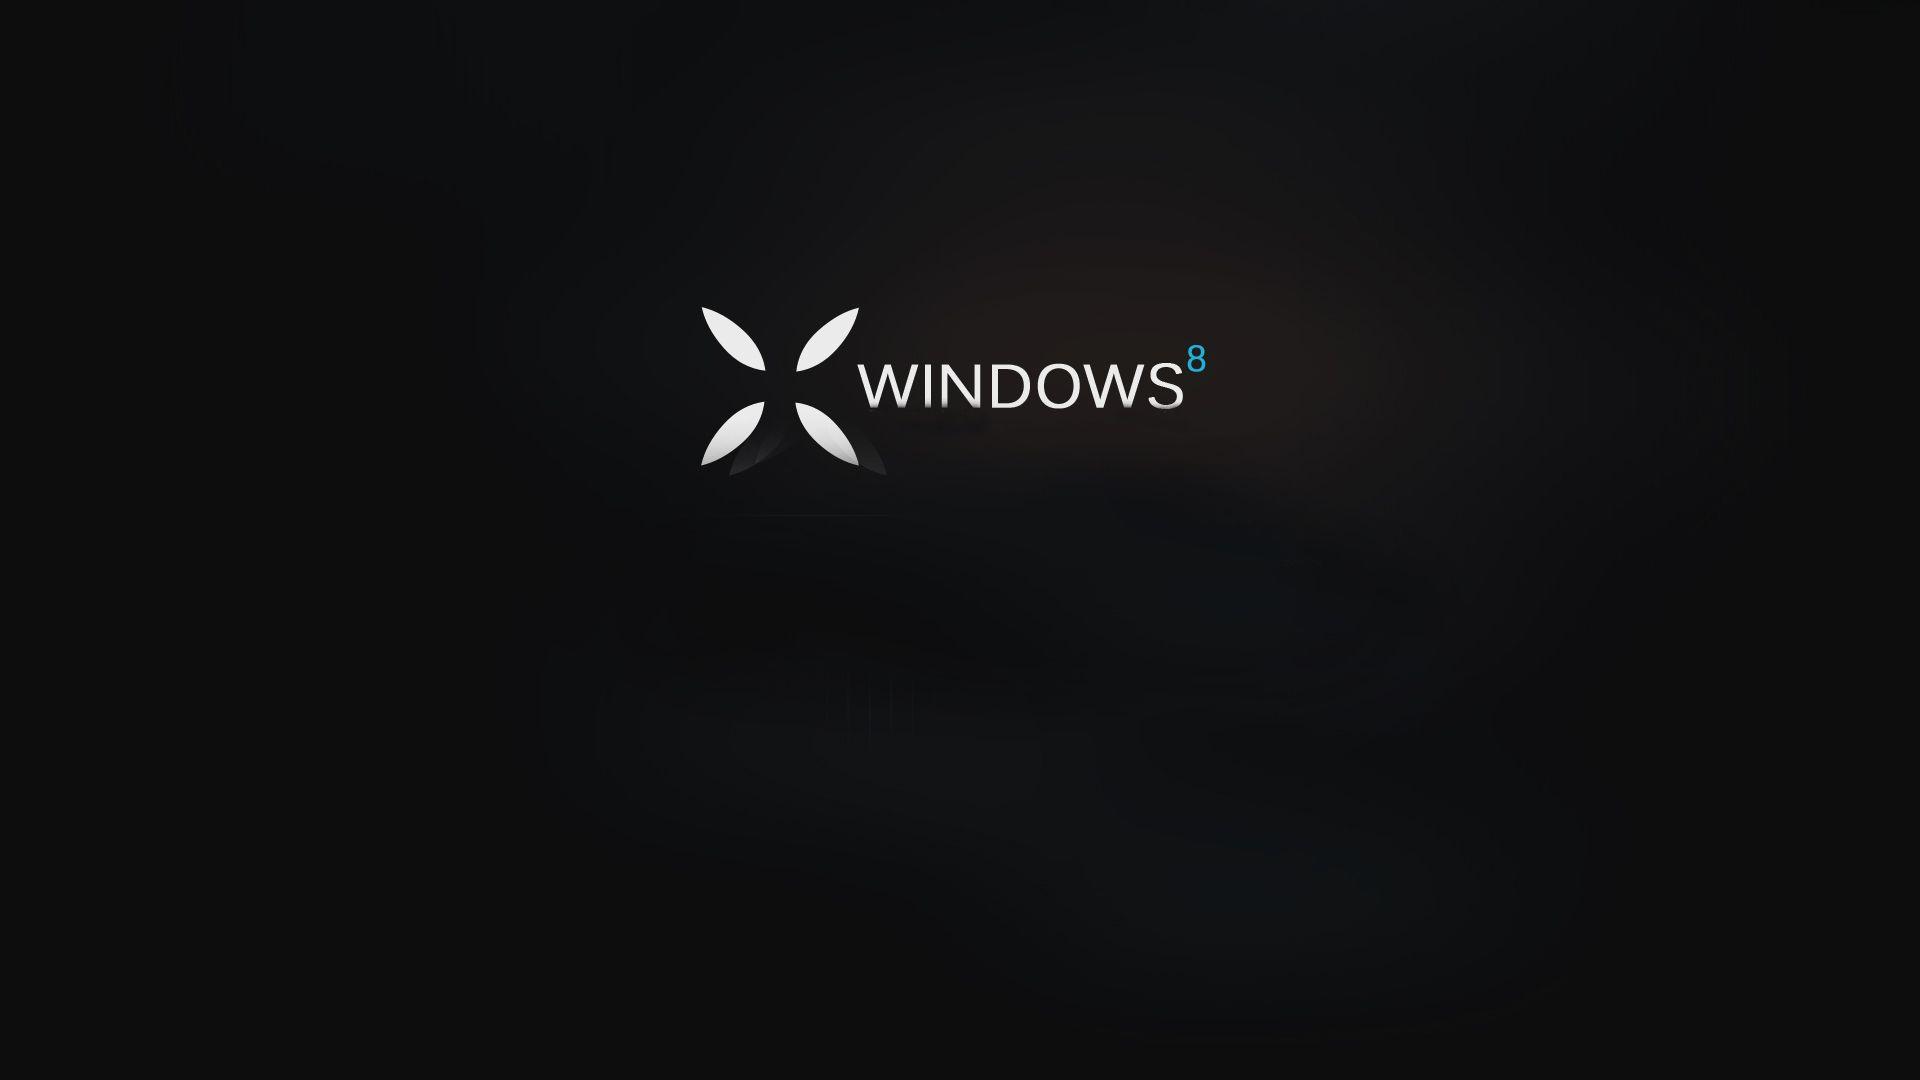 Windows 8 HD Black Desktop Background Wallpaper